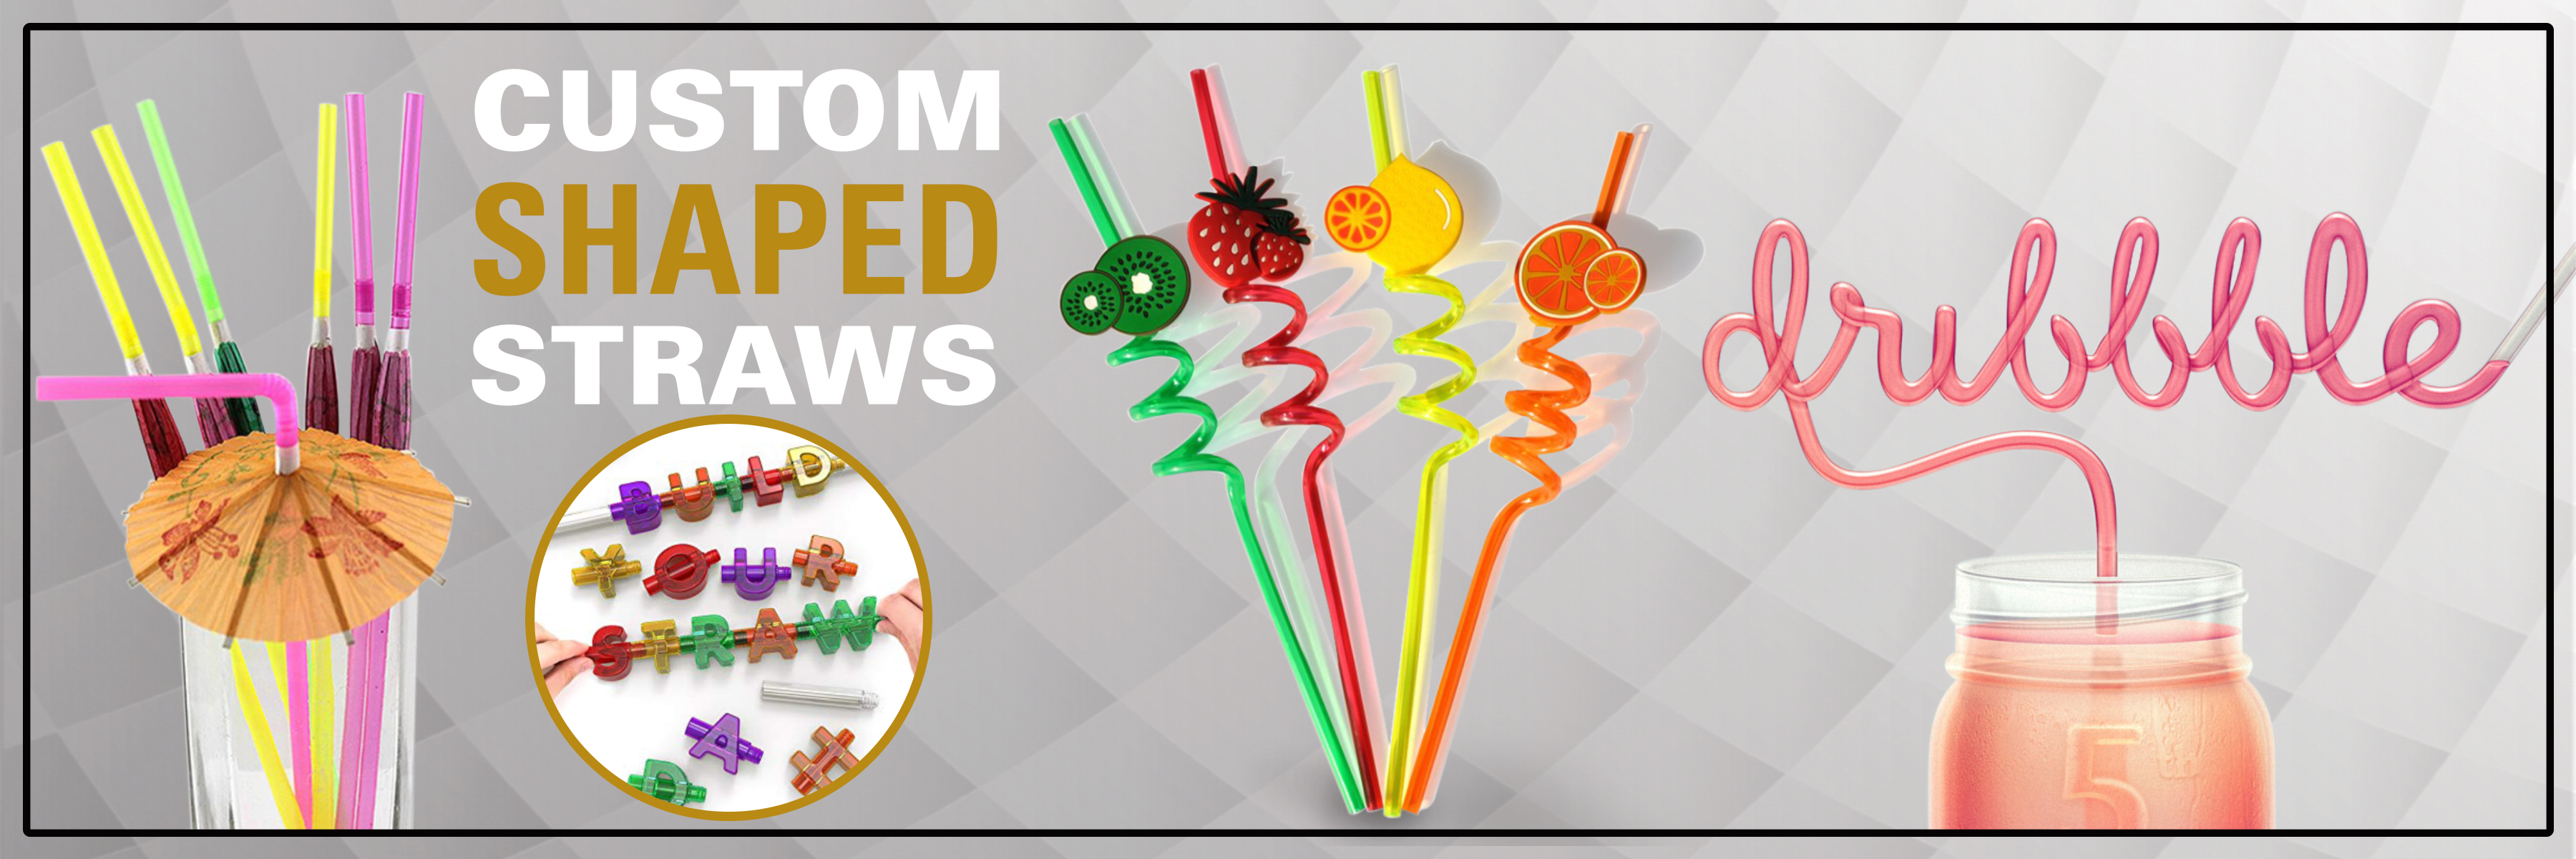 custom shaped straws